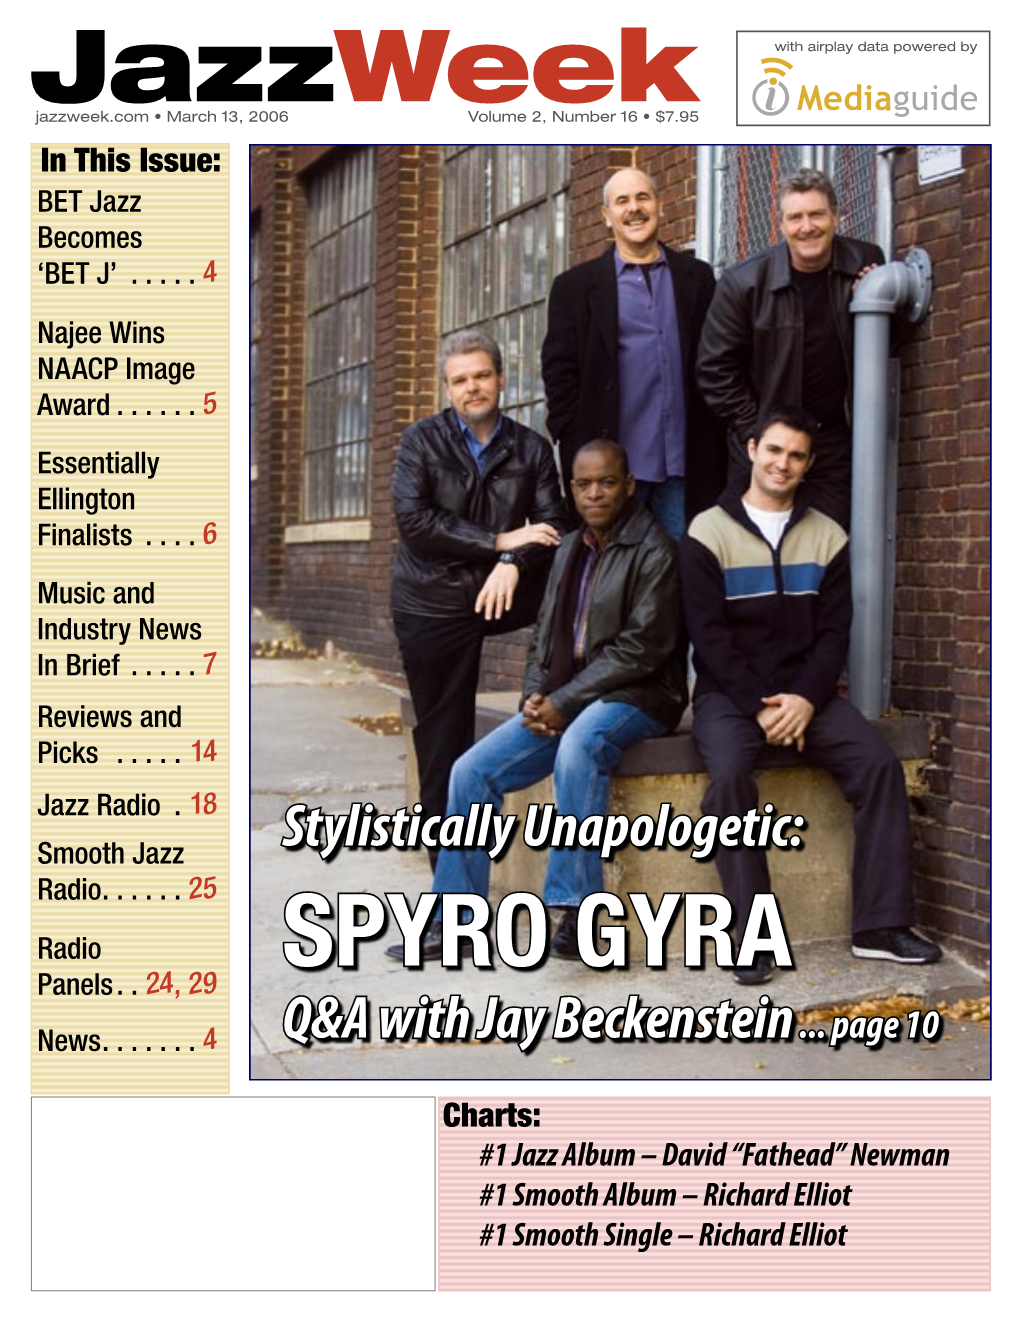 Jazzweek SPYRO GYRA